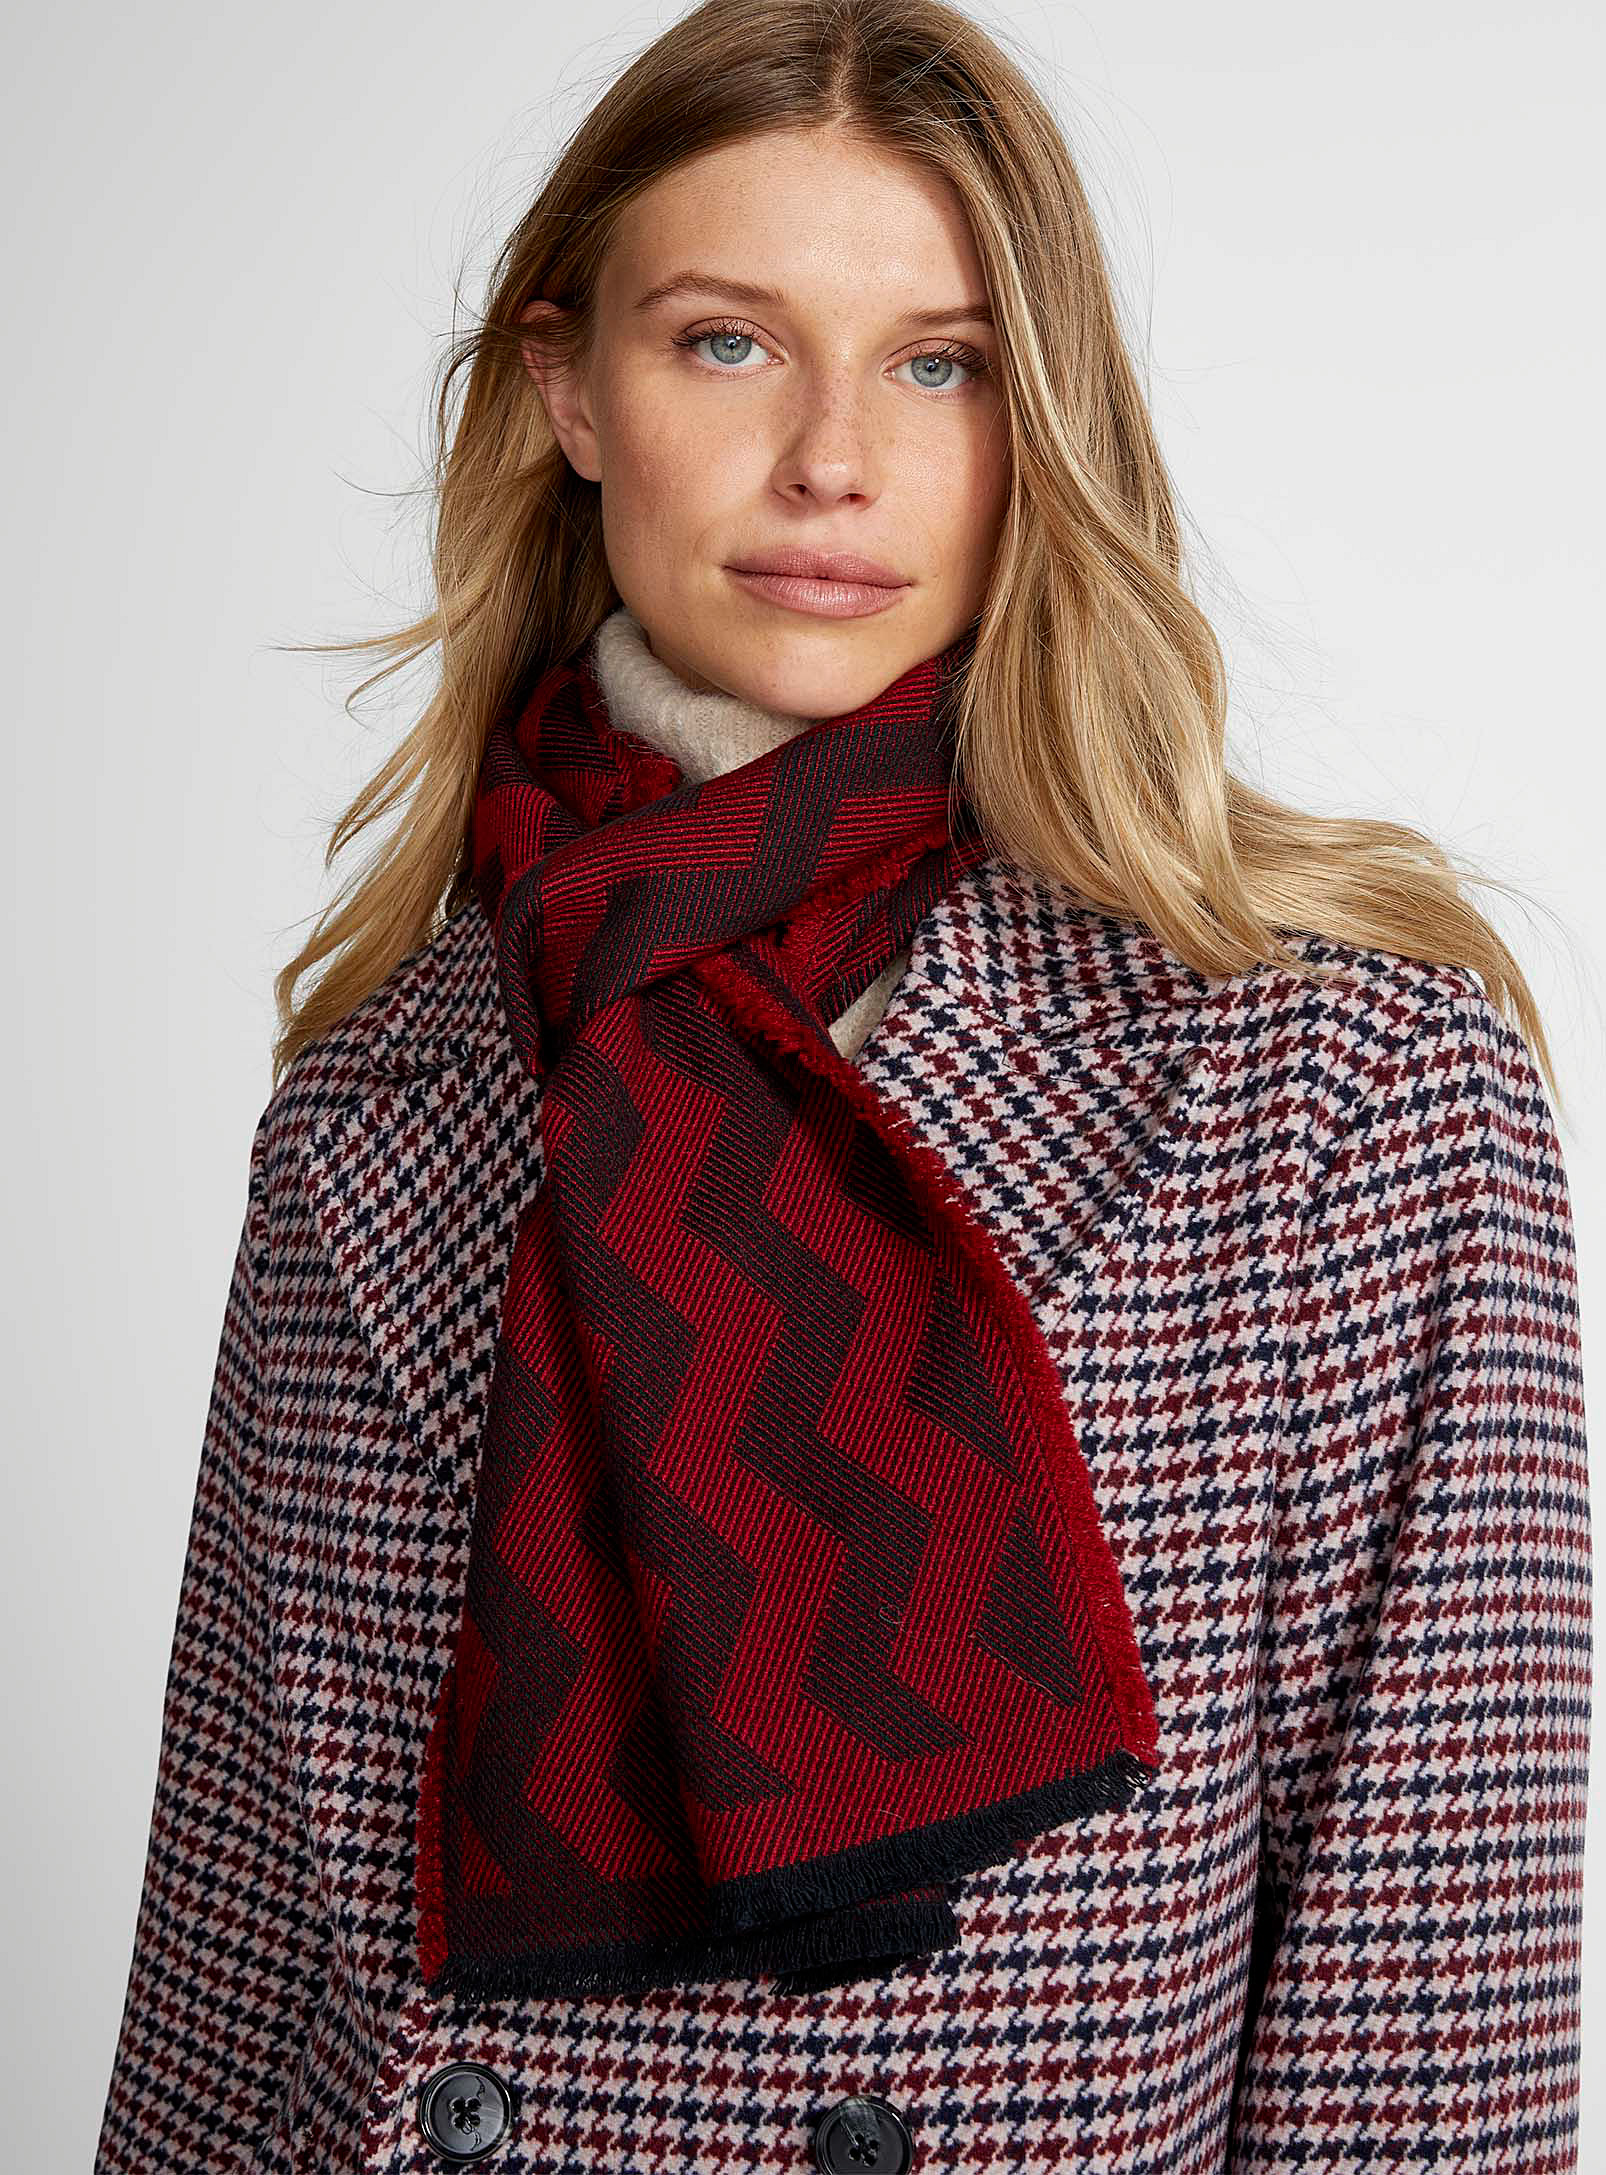 Lysanne Latulippe - Herringbone pattern scarlet cotton and merino scarf